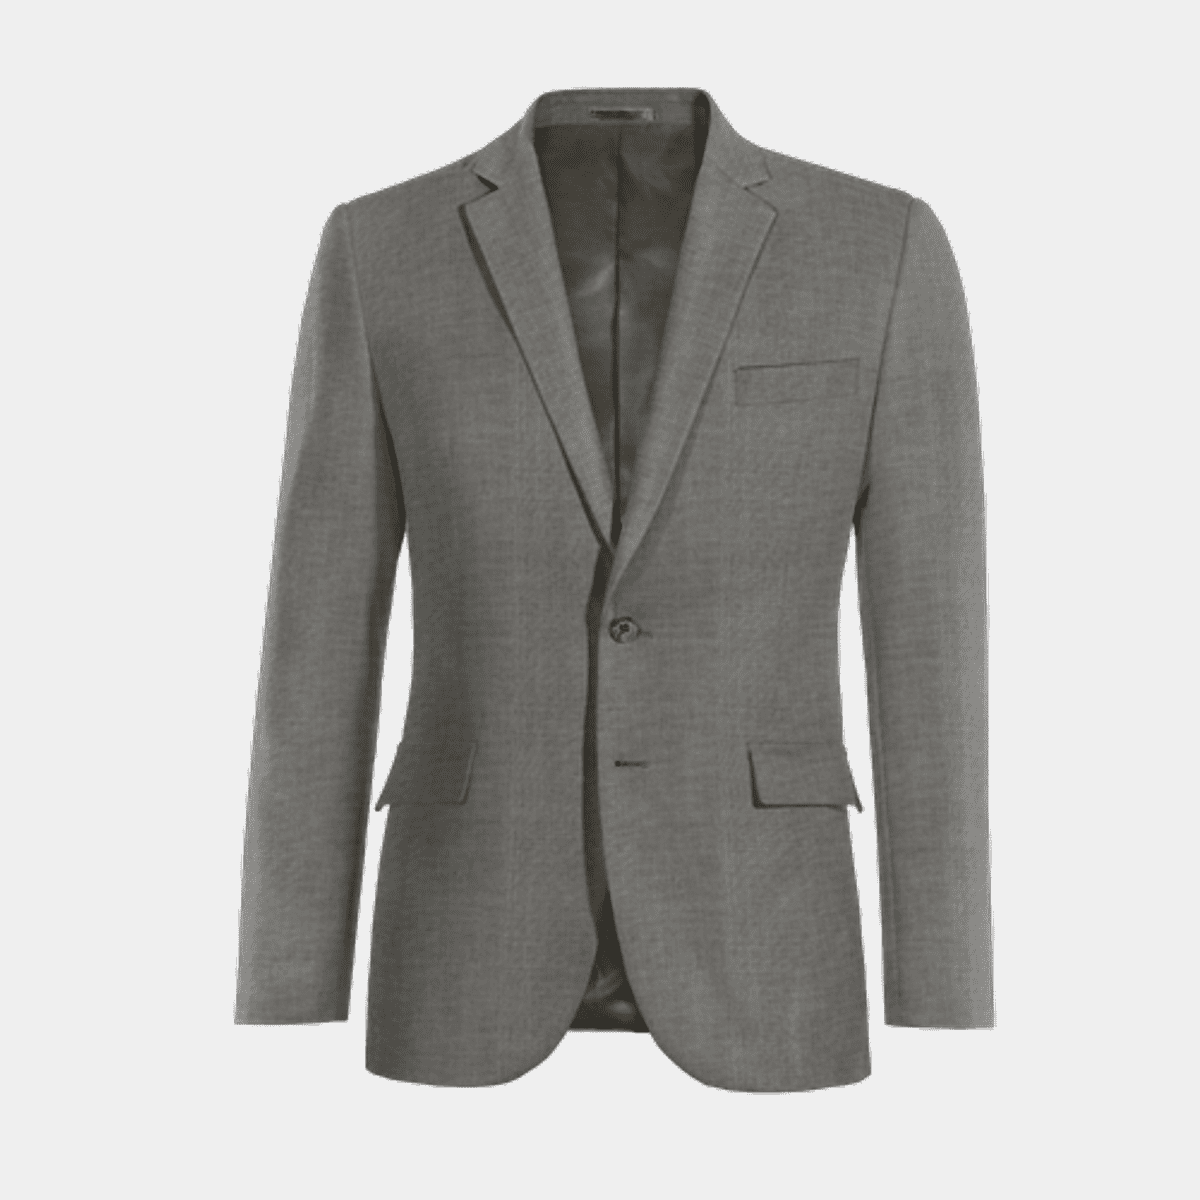 Iron grey super 100s Merino Wool Suit Jacket